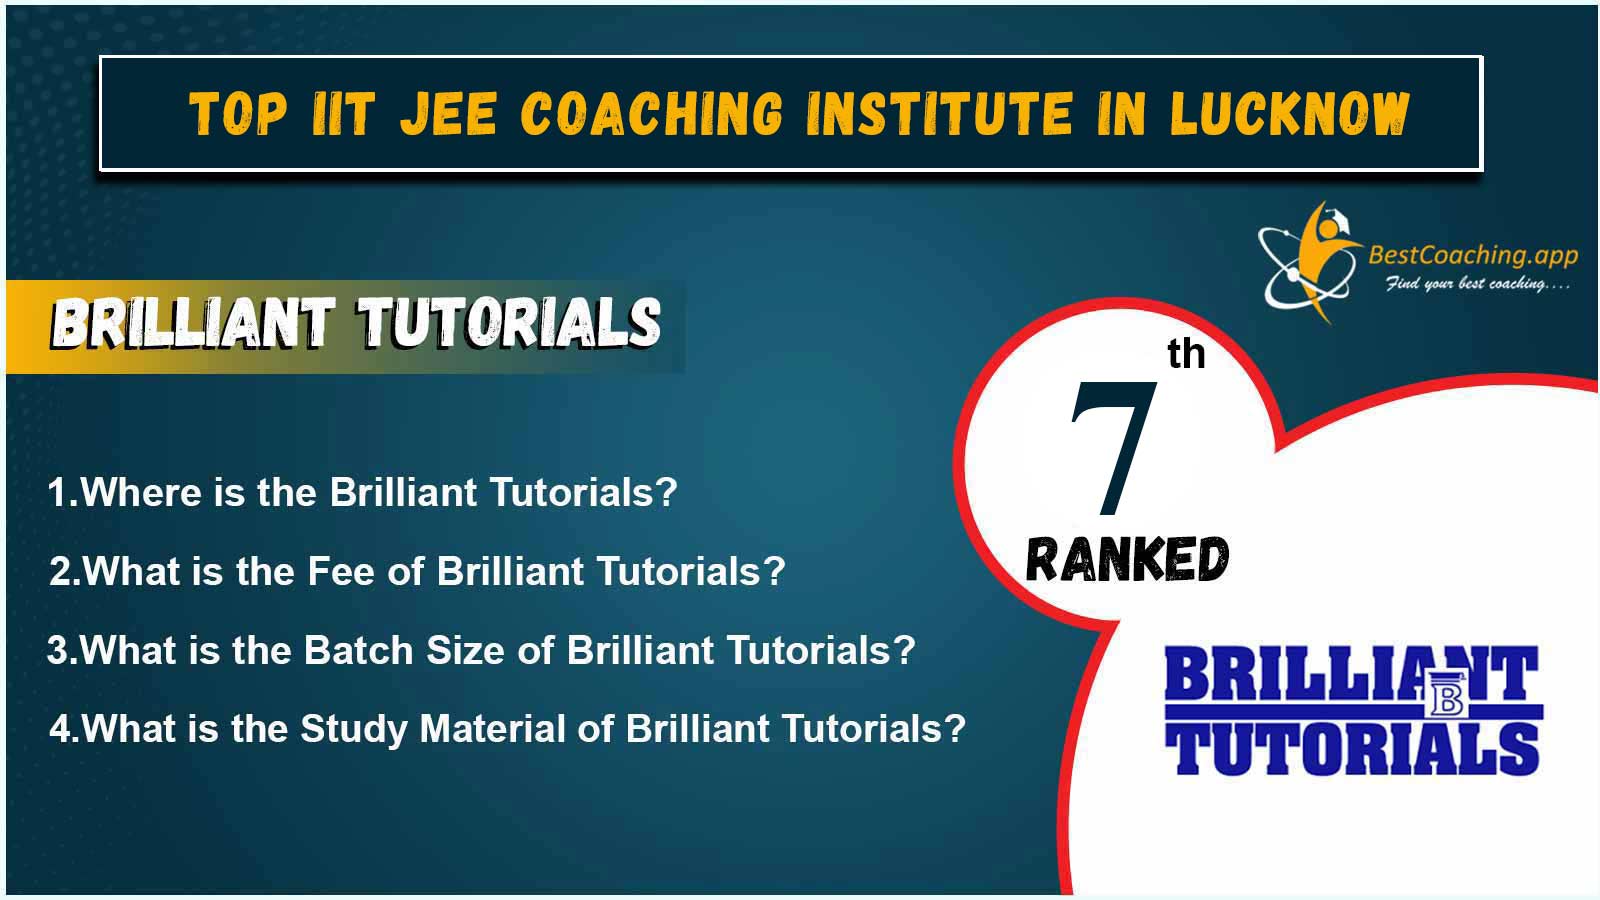 Top IIT JEE Coaching Institute of Lucknow